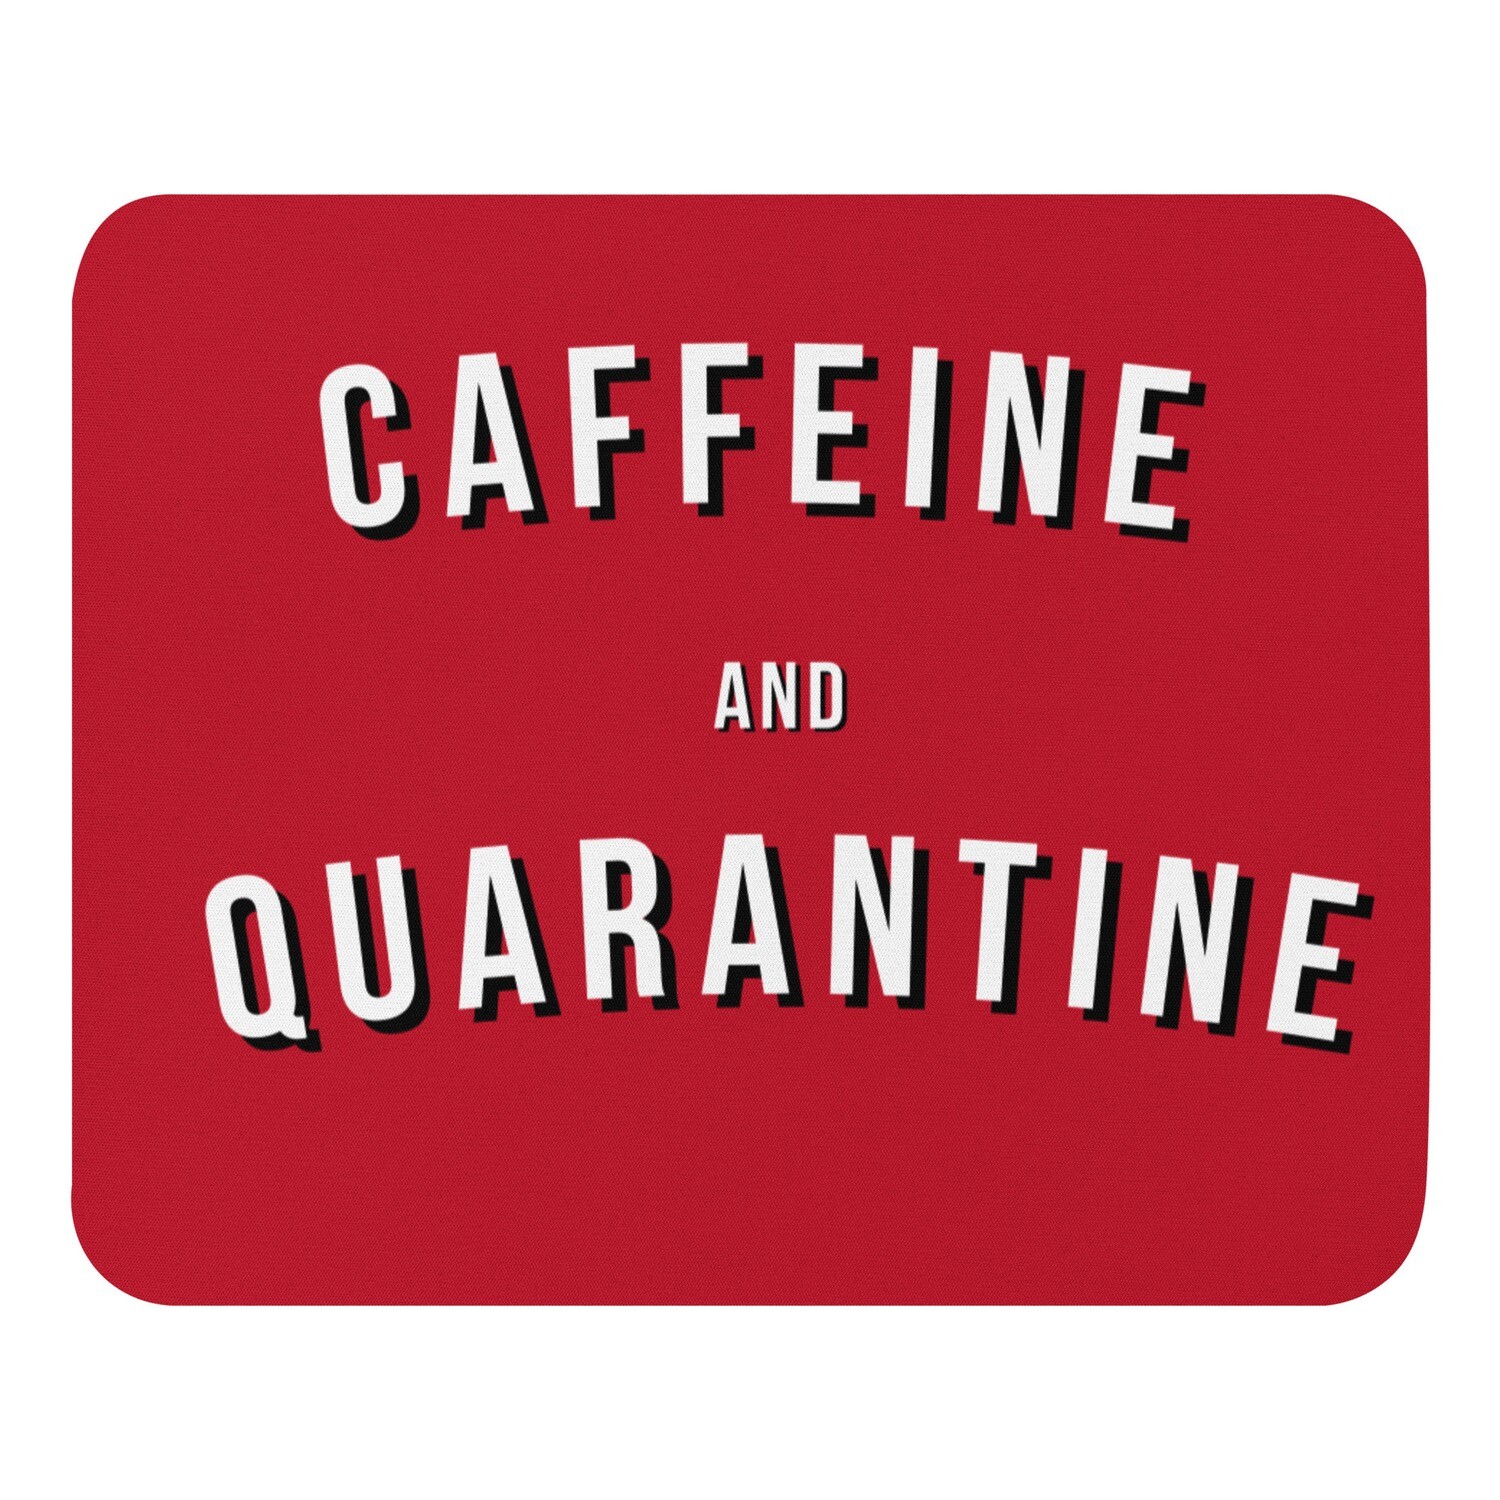 Caffeine and Quarantine Mouse pad